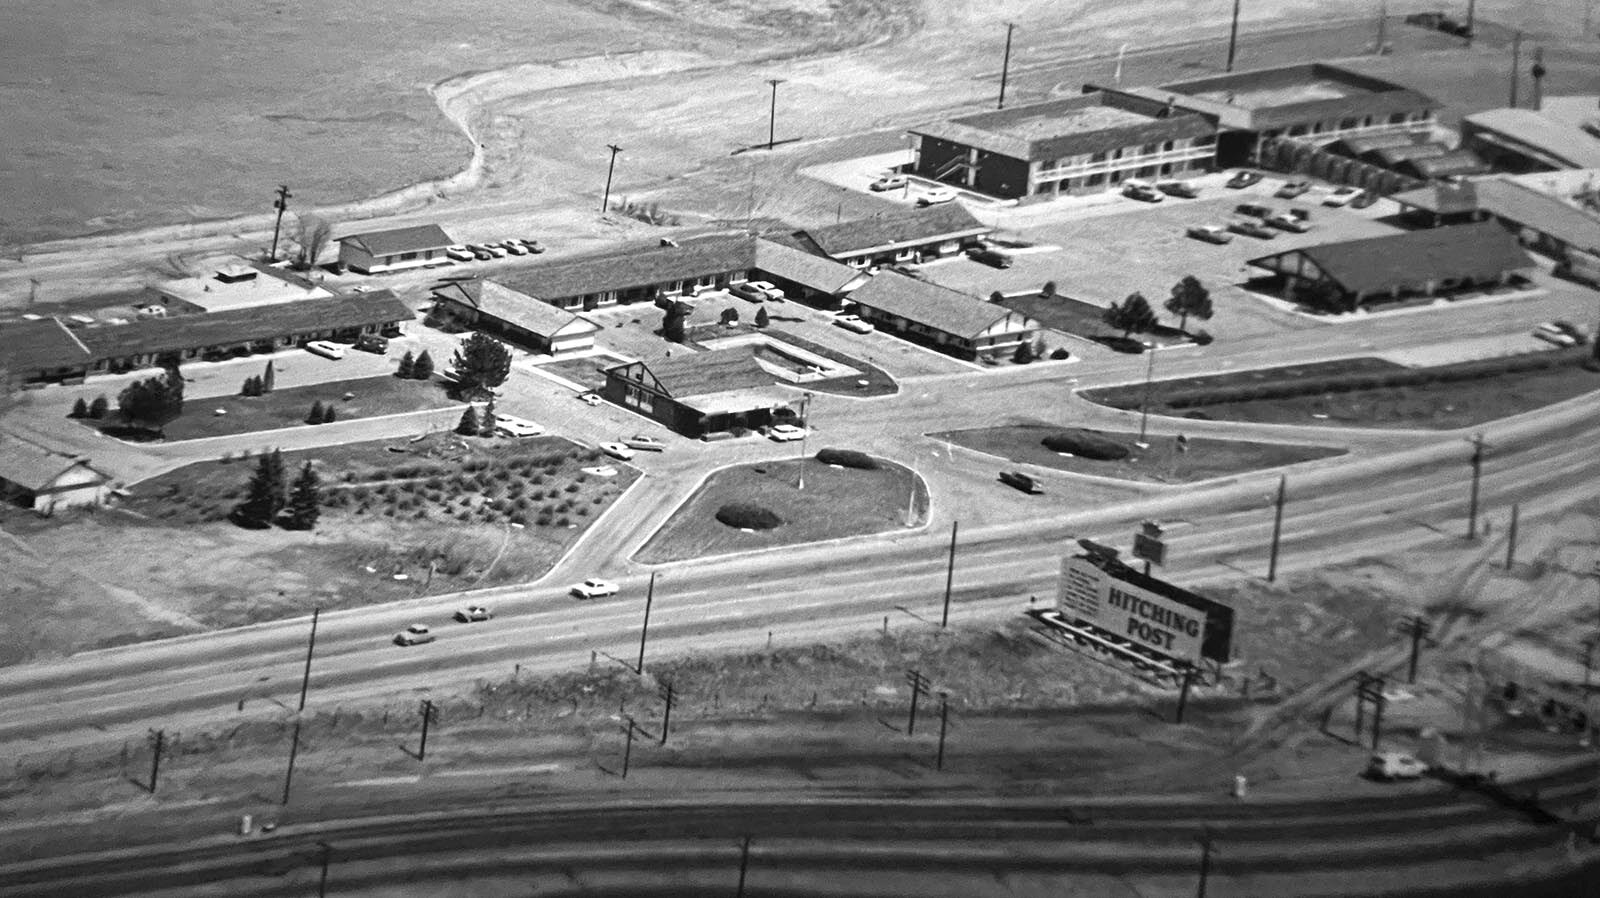 An aerial view of the Hitching Post Inn campus circa 1965.